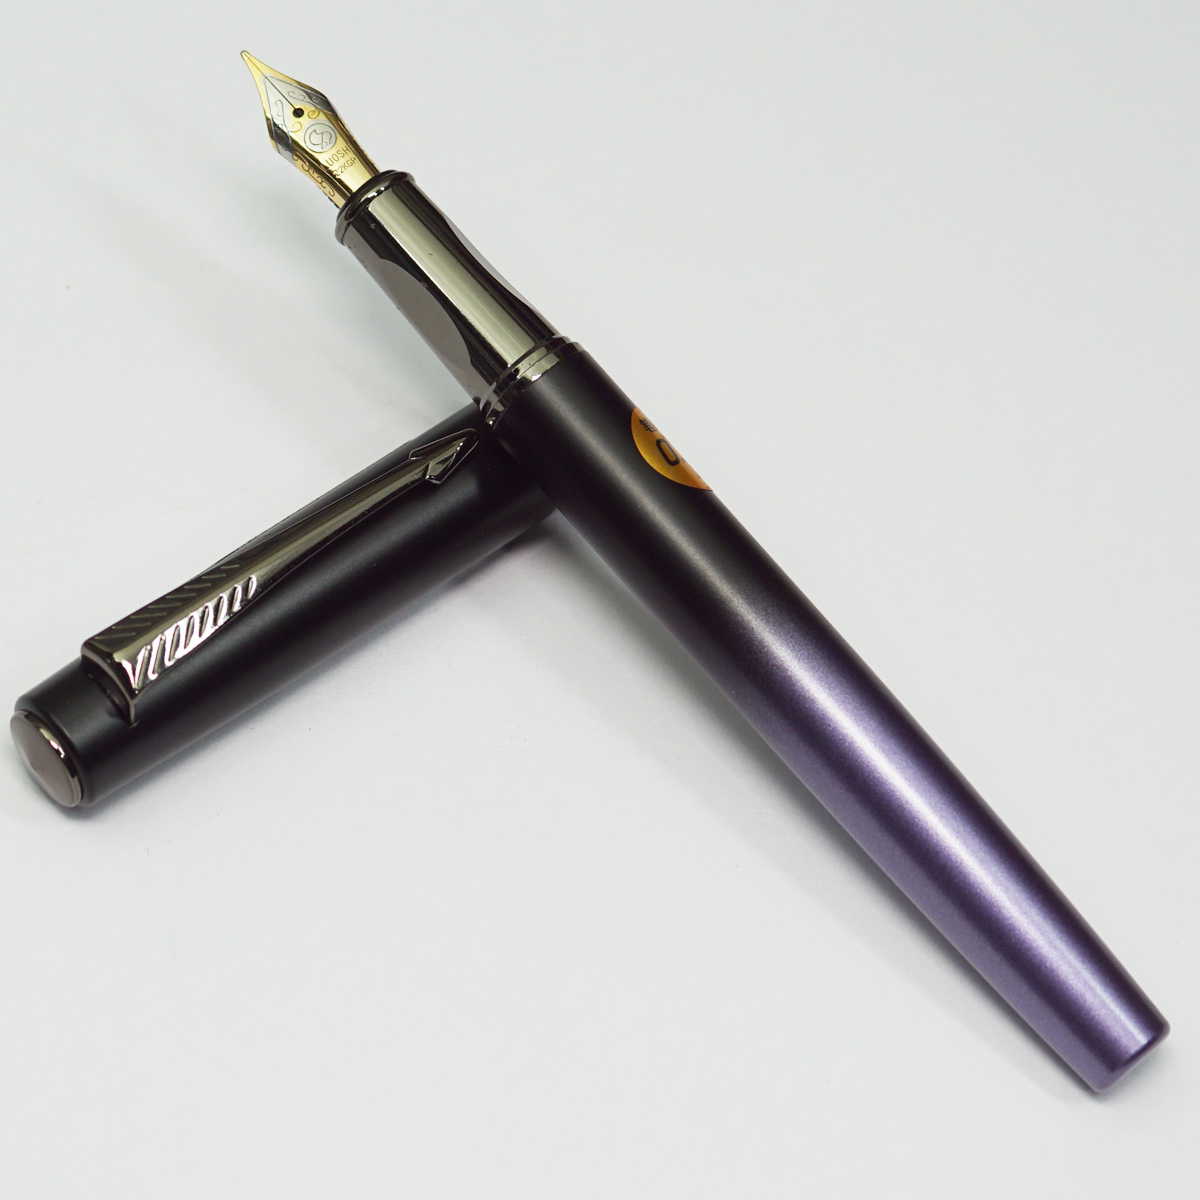 Luoshi 5162 Black With Violet Color Body With Silver Clip 0.5mm Medium Nib Converter Type Fountain Pen SKU 22800